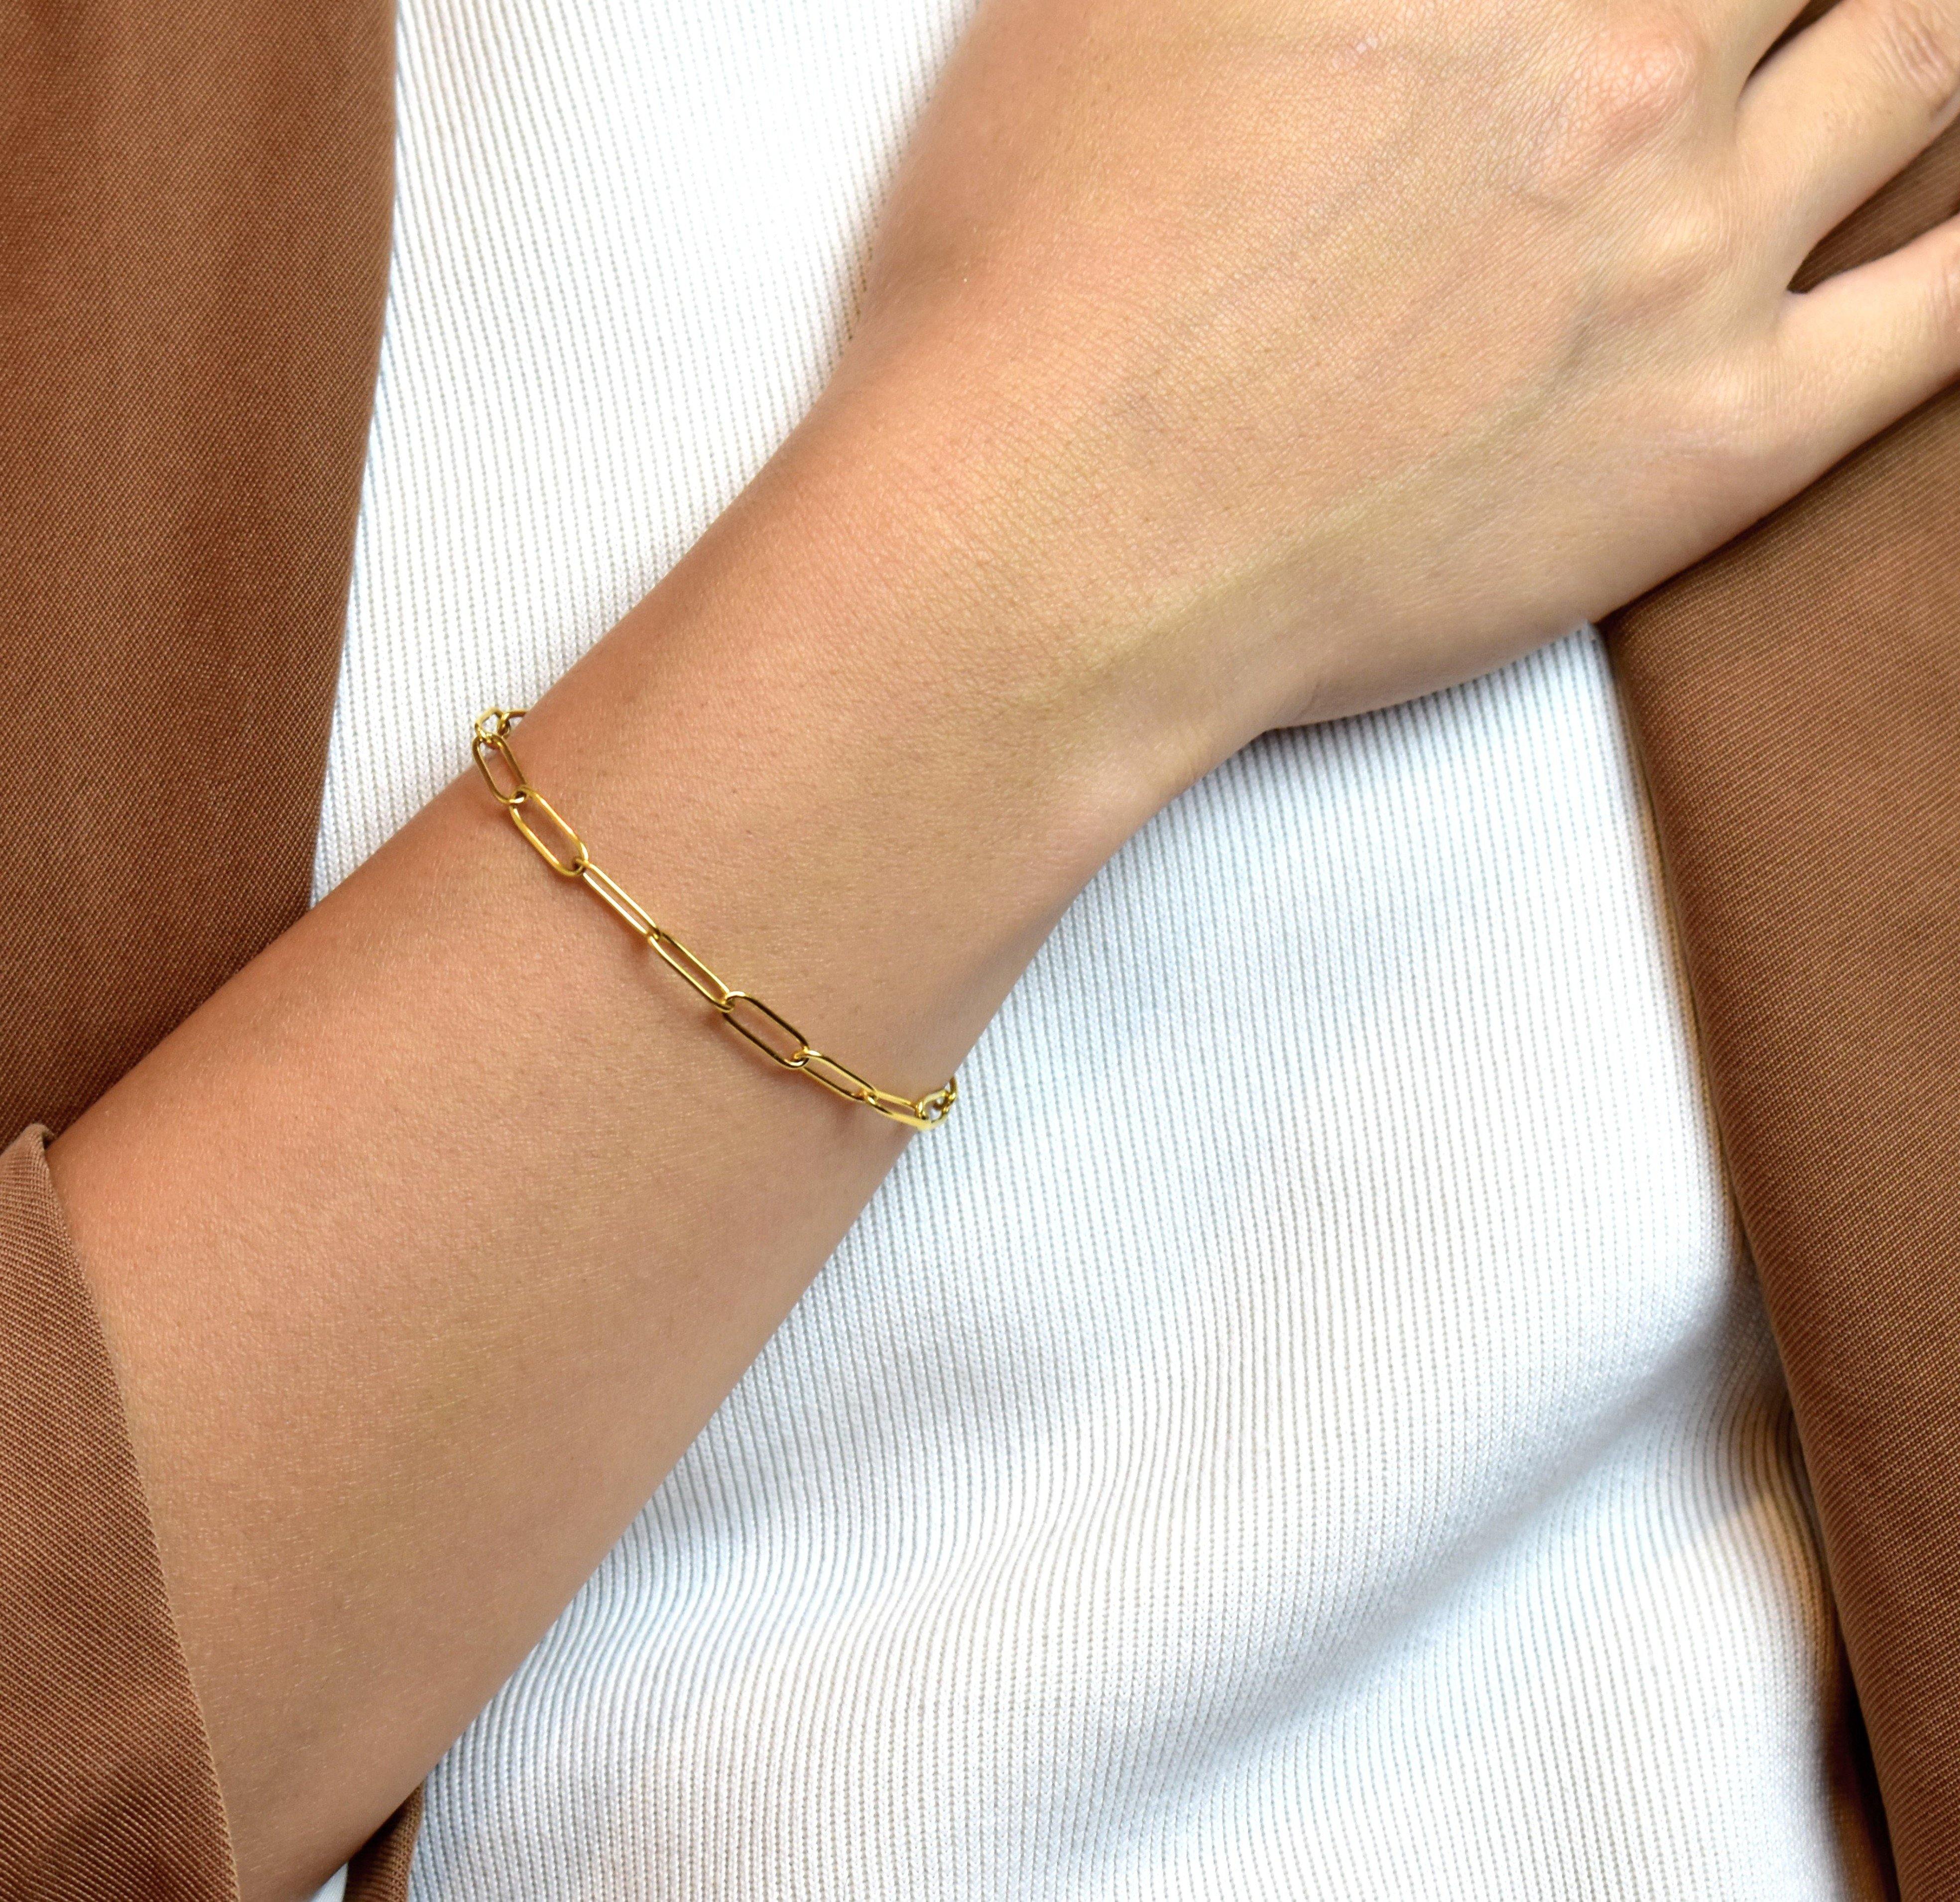 18k Saudi Gold Paperclip Bracelet Sz7.5 - Jewelry